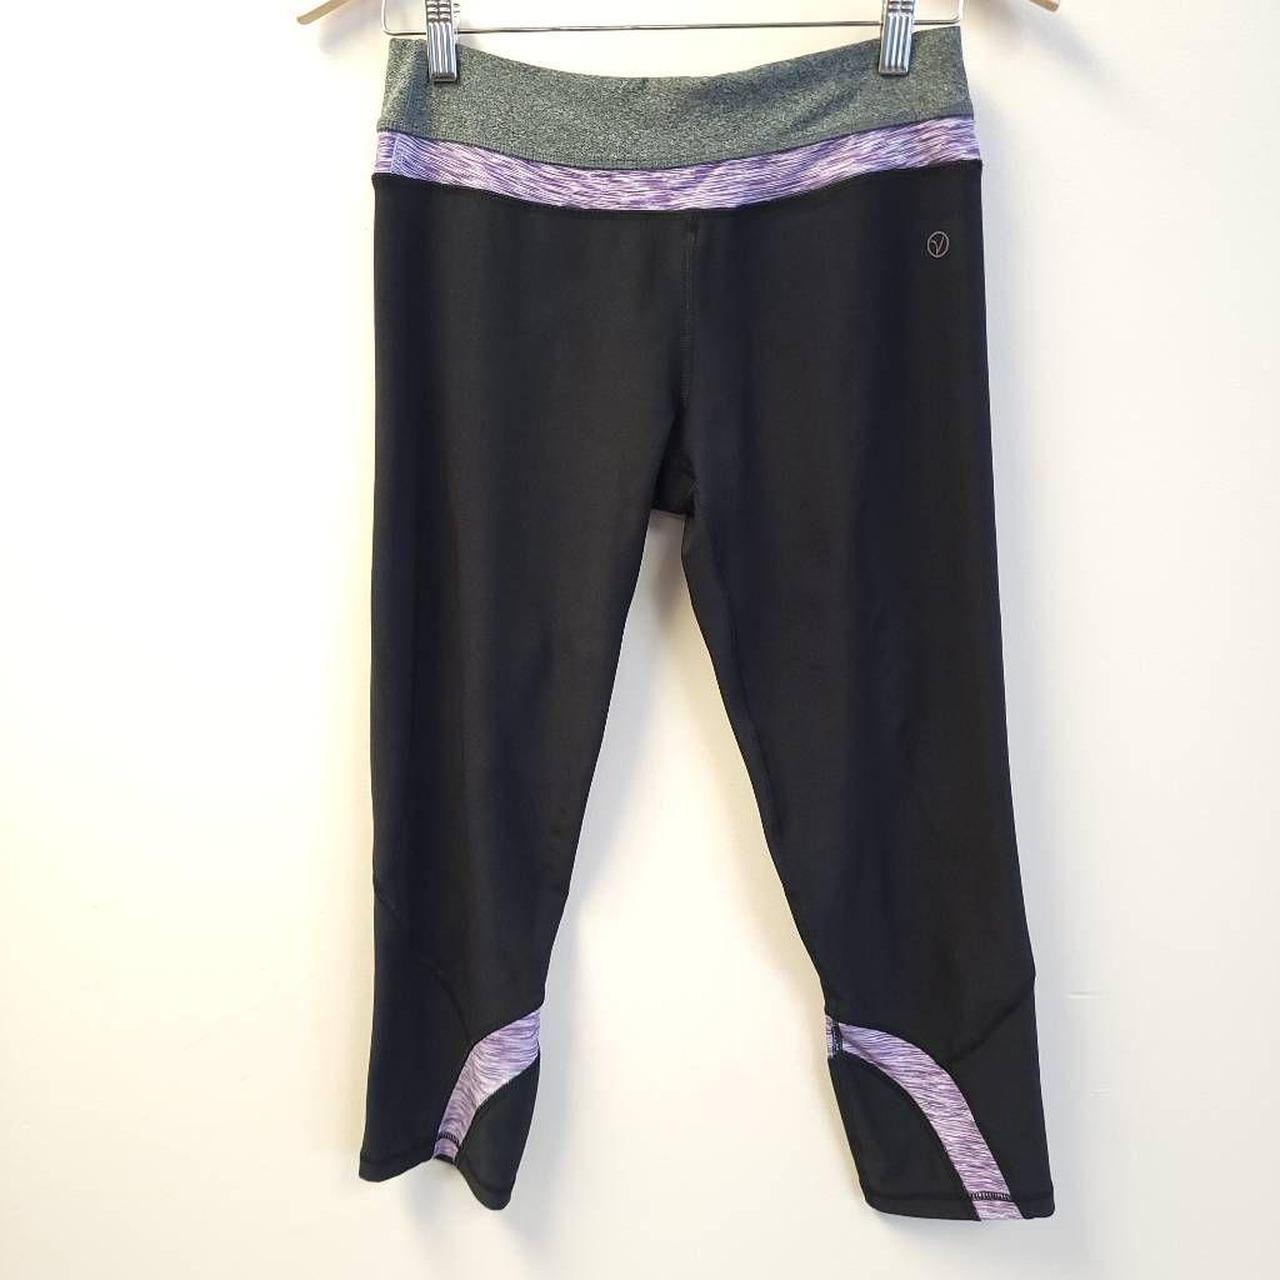 VOGO Athletica Women's Capri Leggings Black Purple - Depop